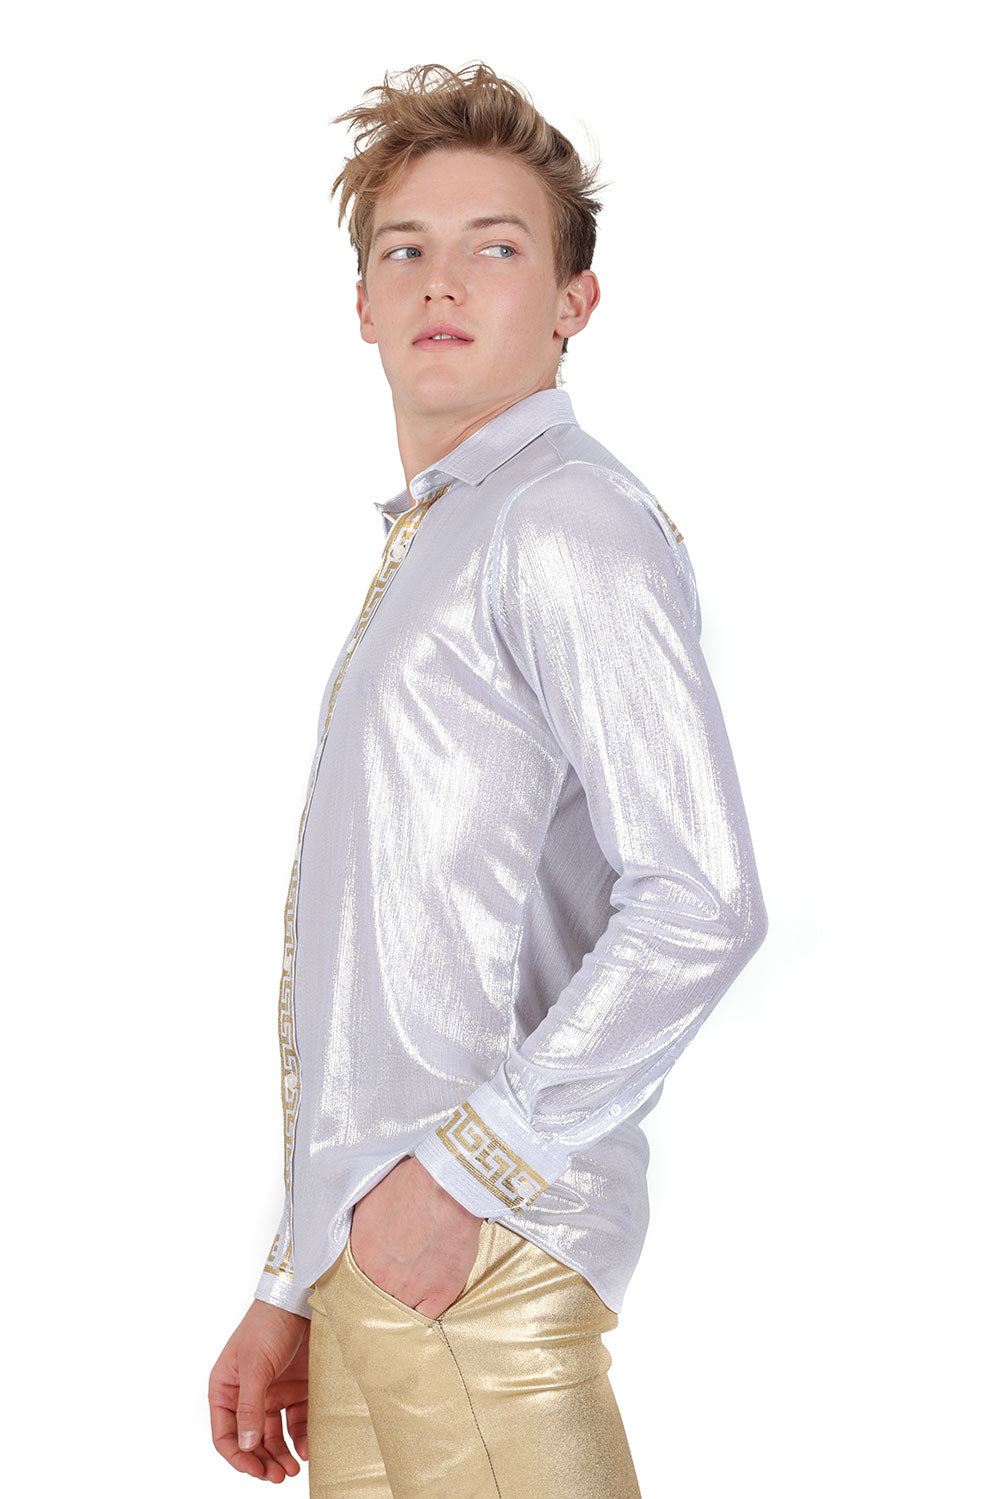 BARABAS Men's Greek Key Print Long Sleeve Button Up Shiny shirts B314 White Gold